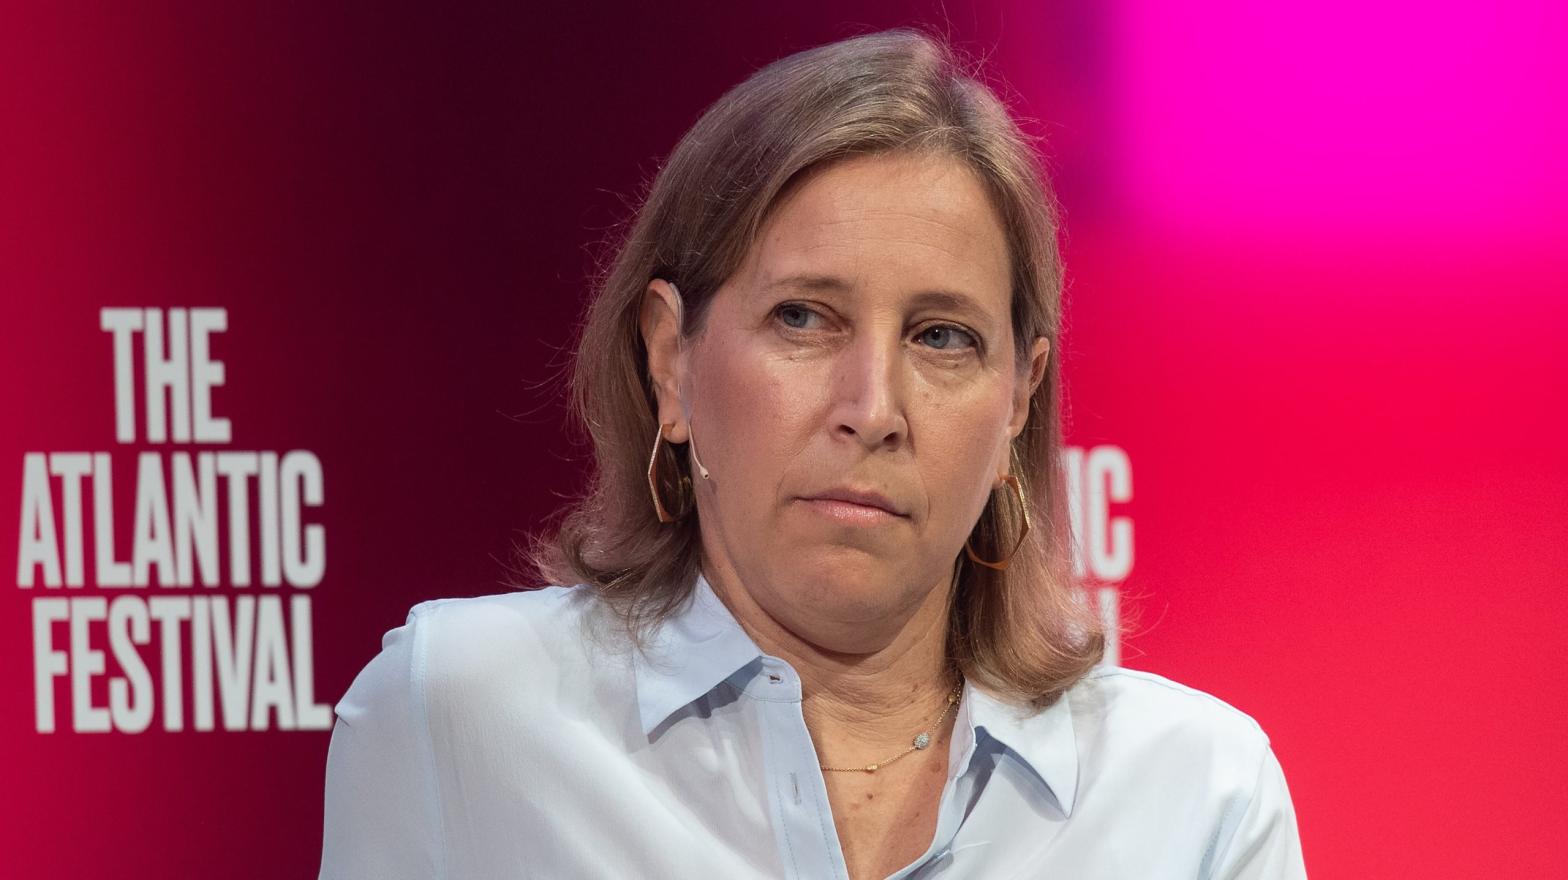 YouTube CEO Susan Wojcicki (Image: Nicholas Kamm, Getty Images)